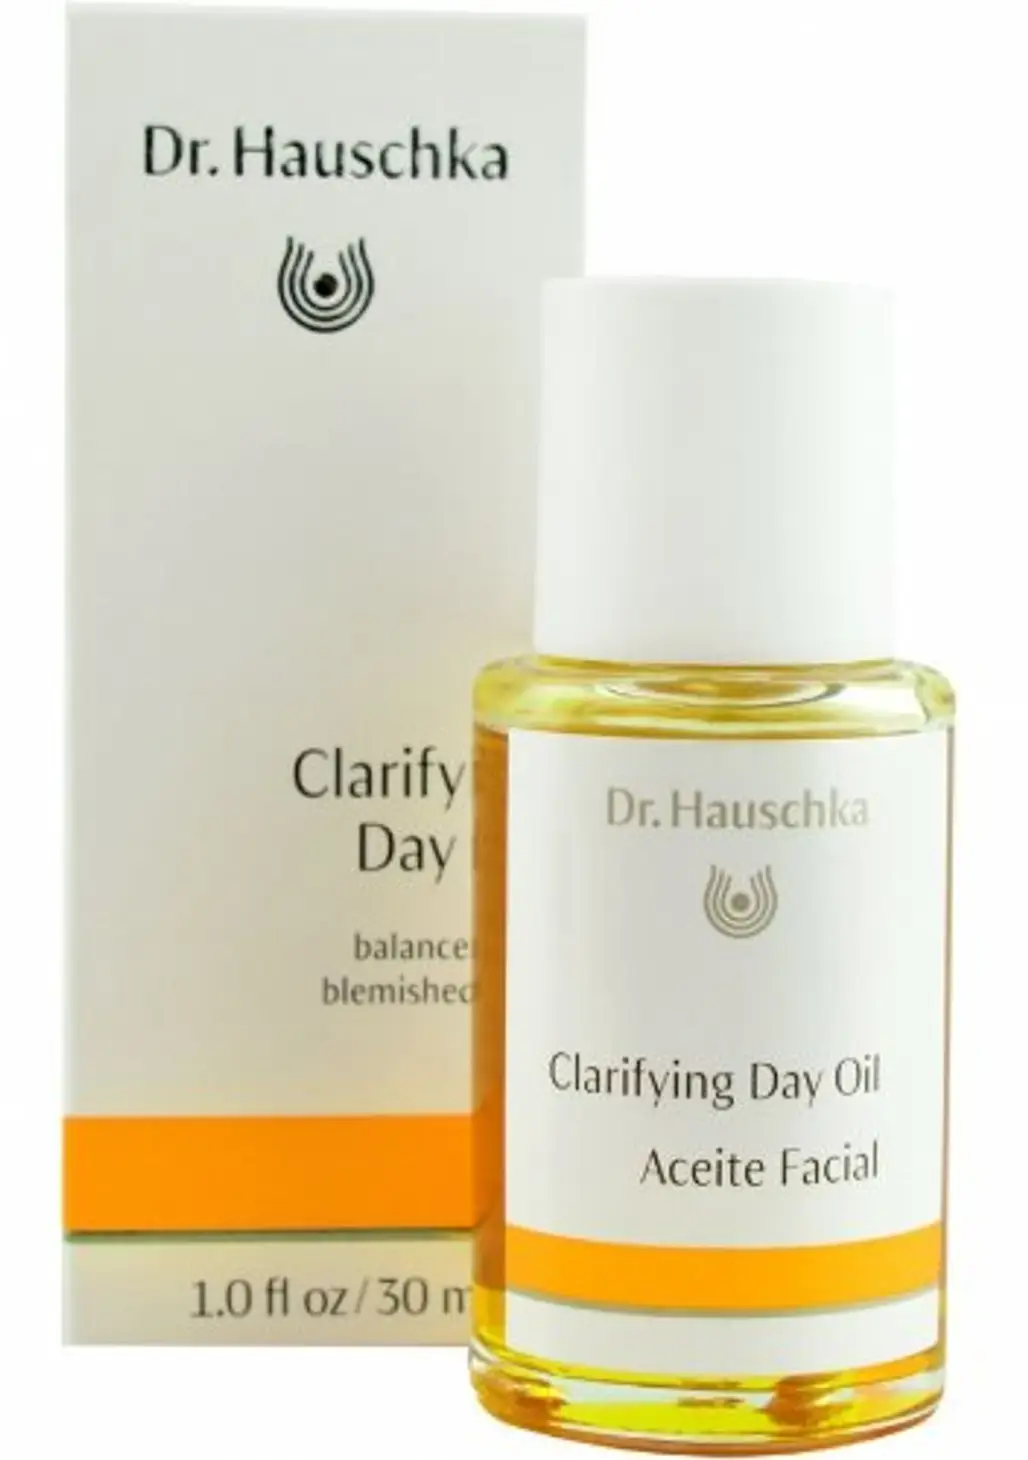 Dr.Hauschka Clarifying Day Oil